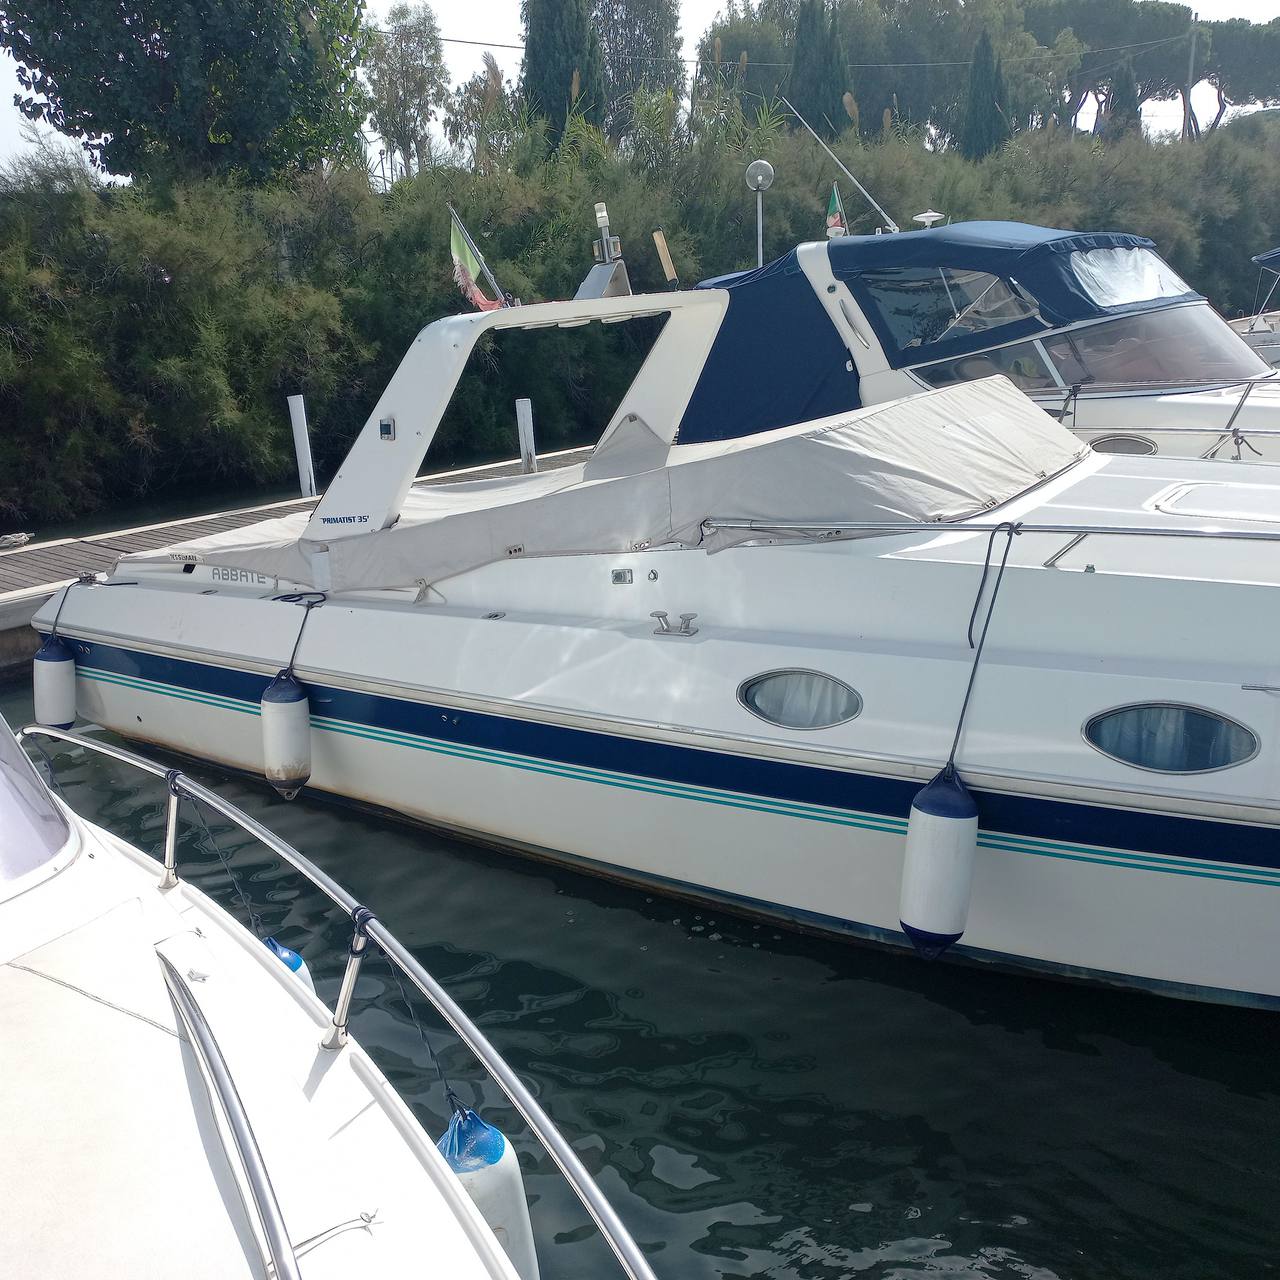 Bruno Abbate Primatist 35 Motor boat used for sale